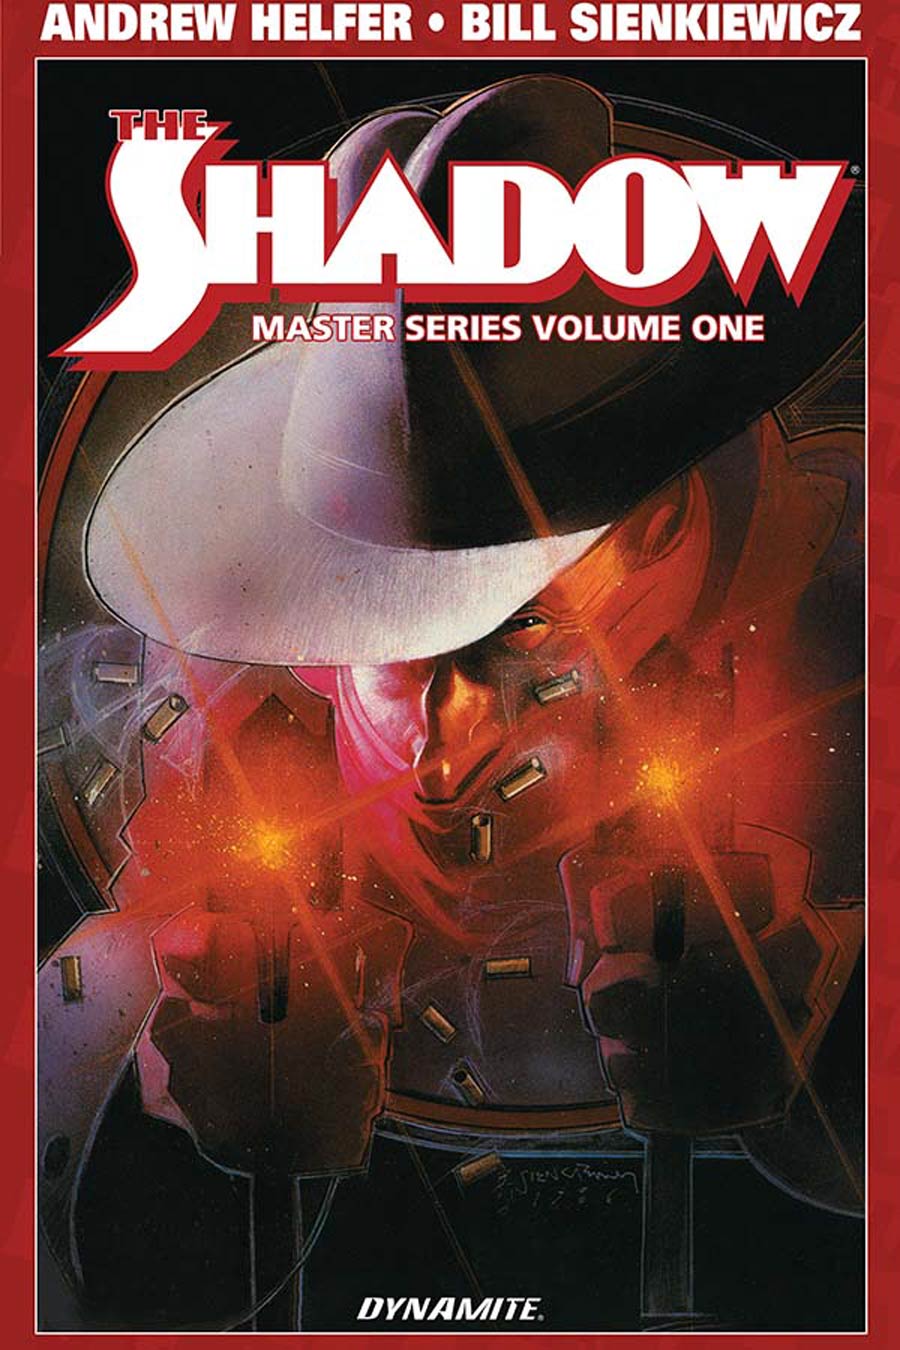 Shadow Master Series Vol 1 TP